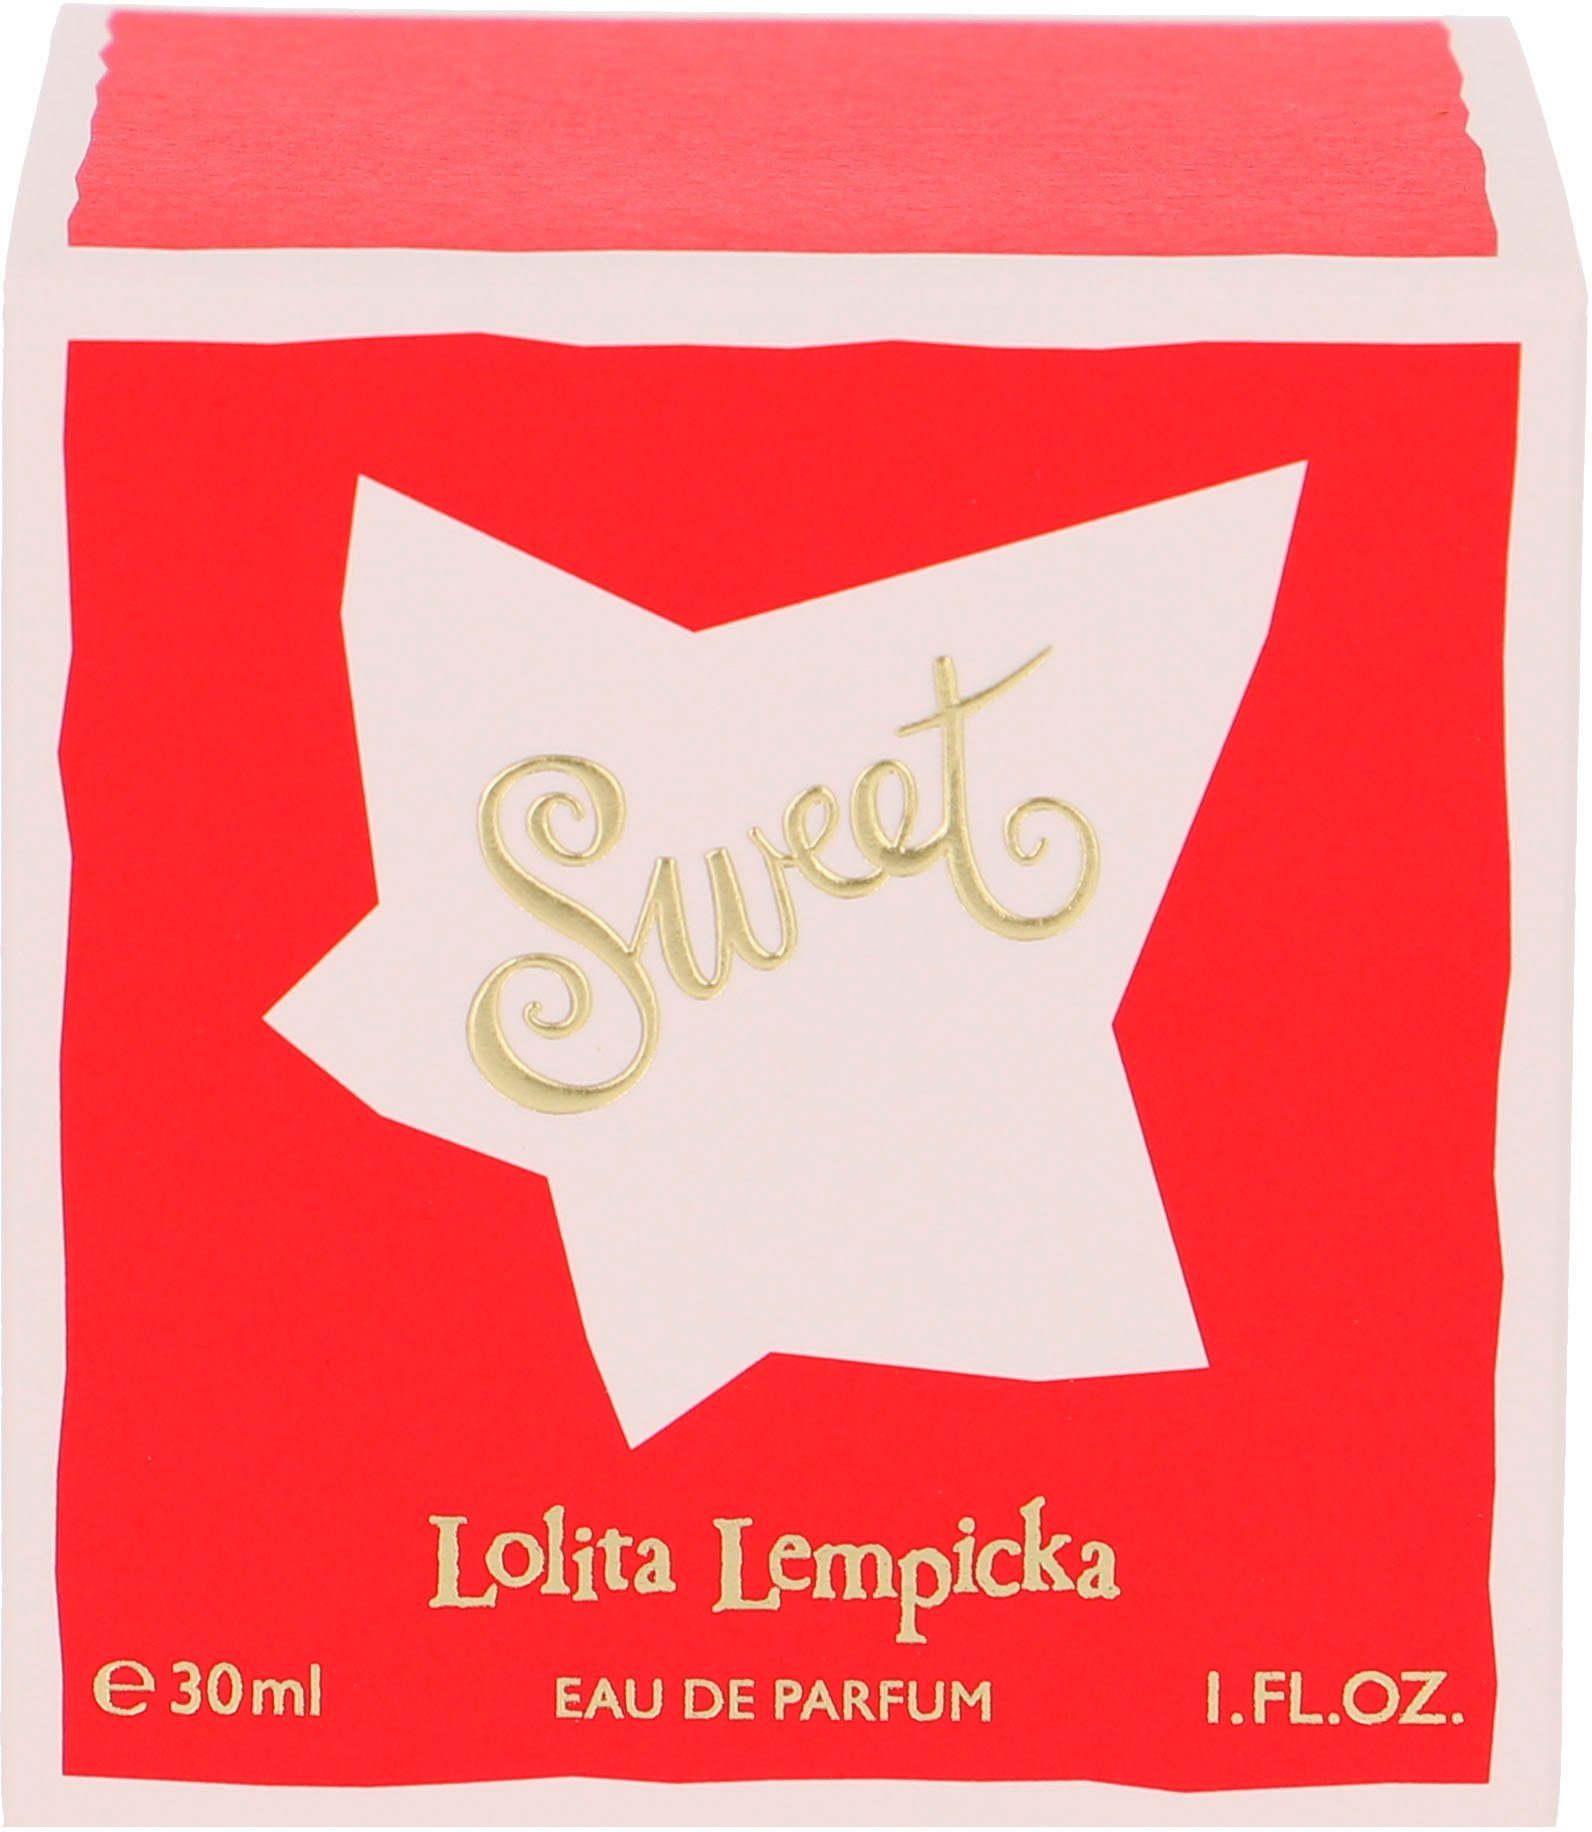 Lempicka Lolita Eau Lempicka de Lolita Parfum Sweet